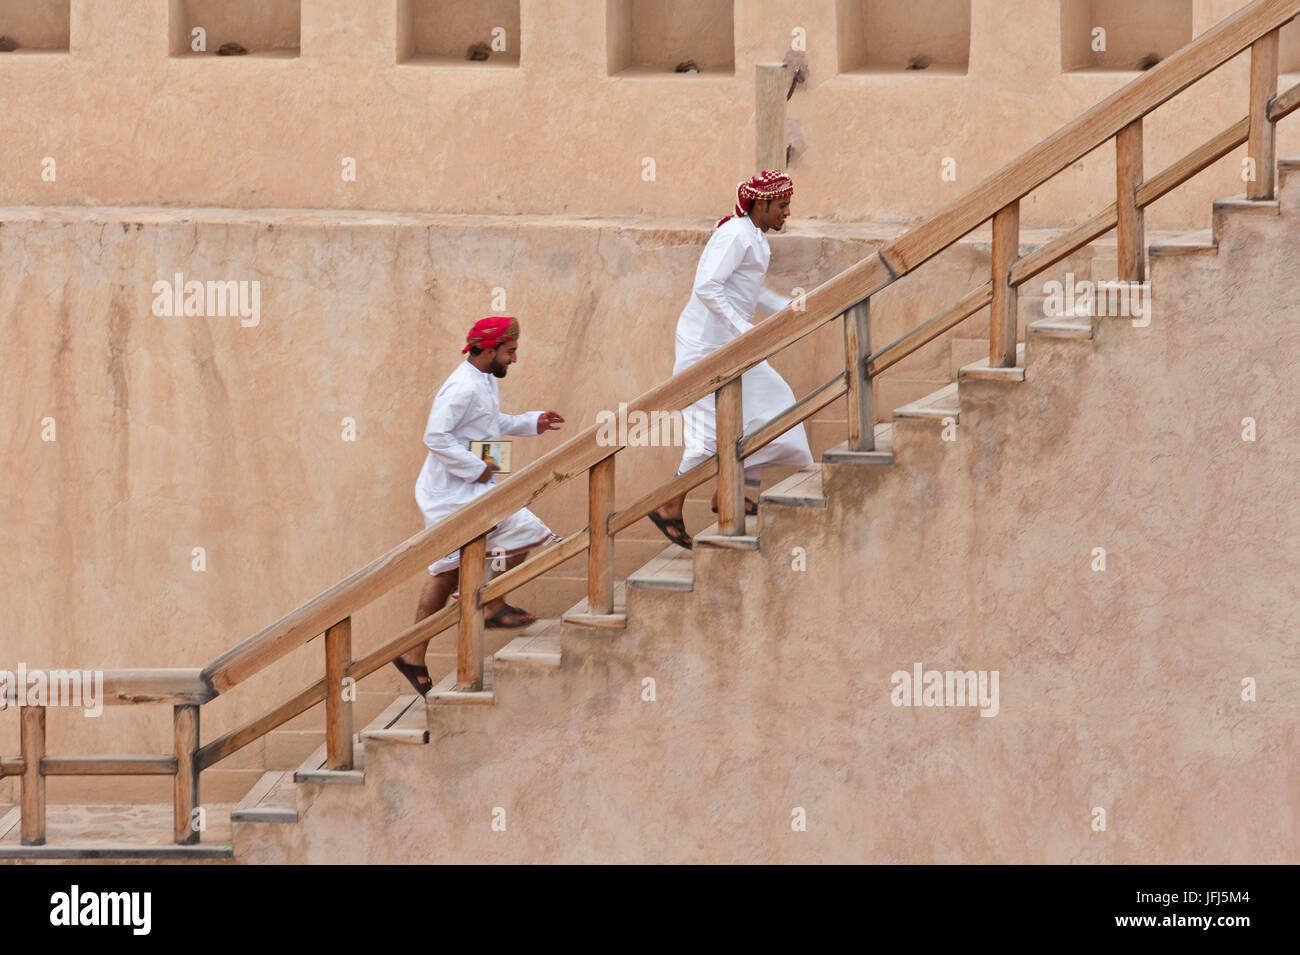 Arabia, Arabian peninsula, Sultanate of Oman, Nizwa, fort Stock Photo